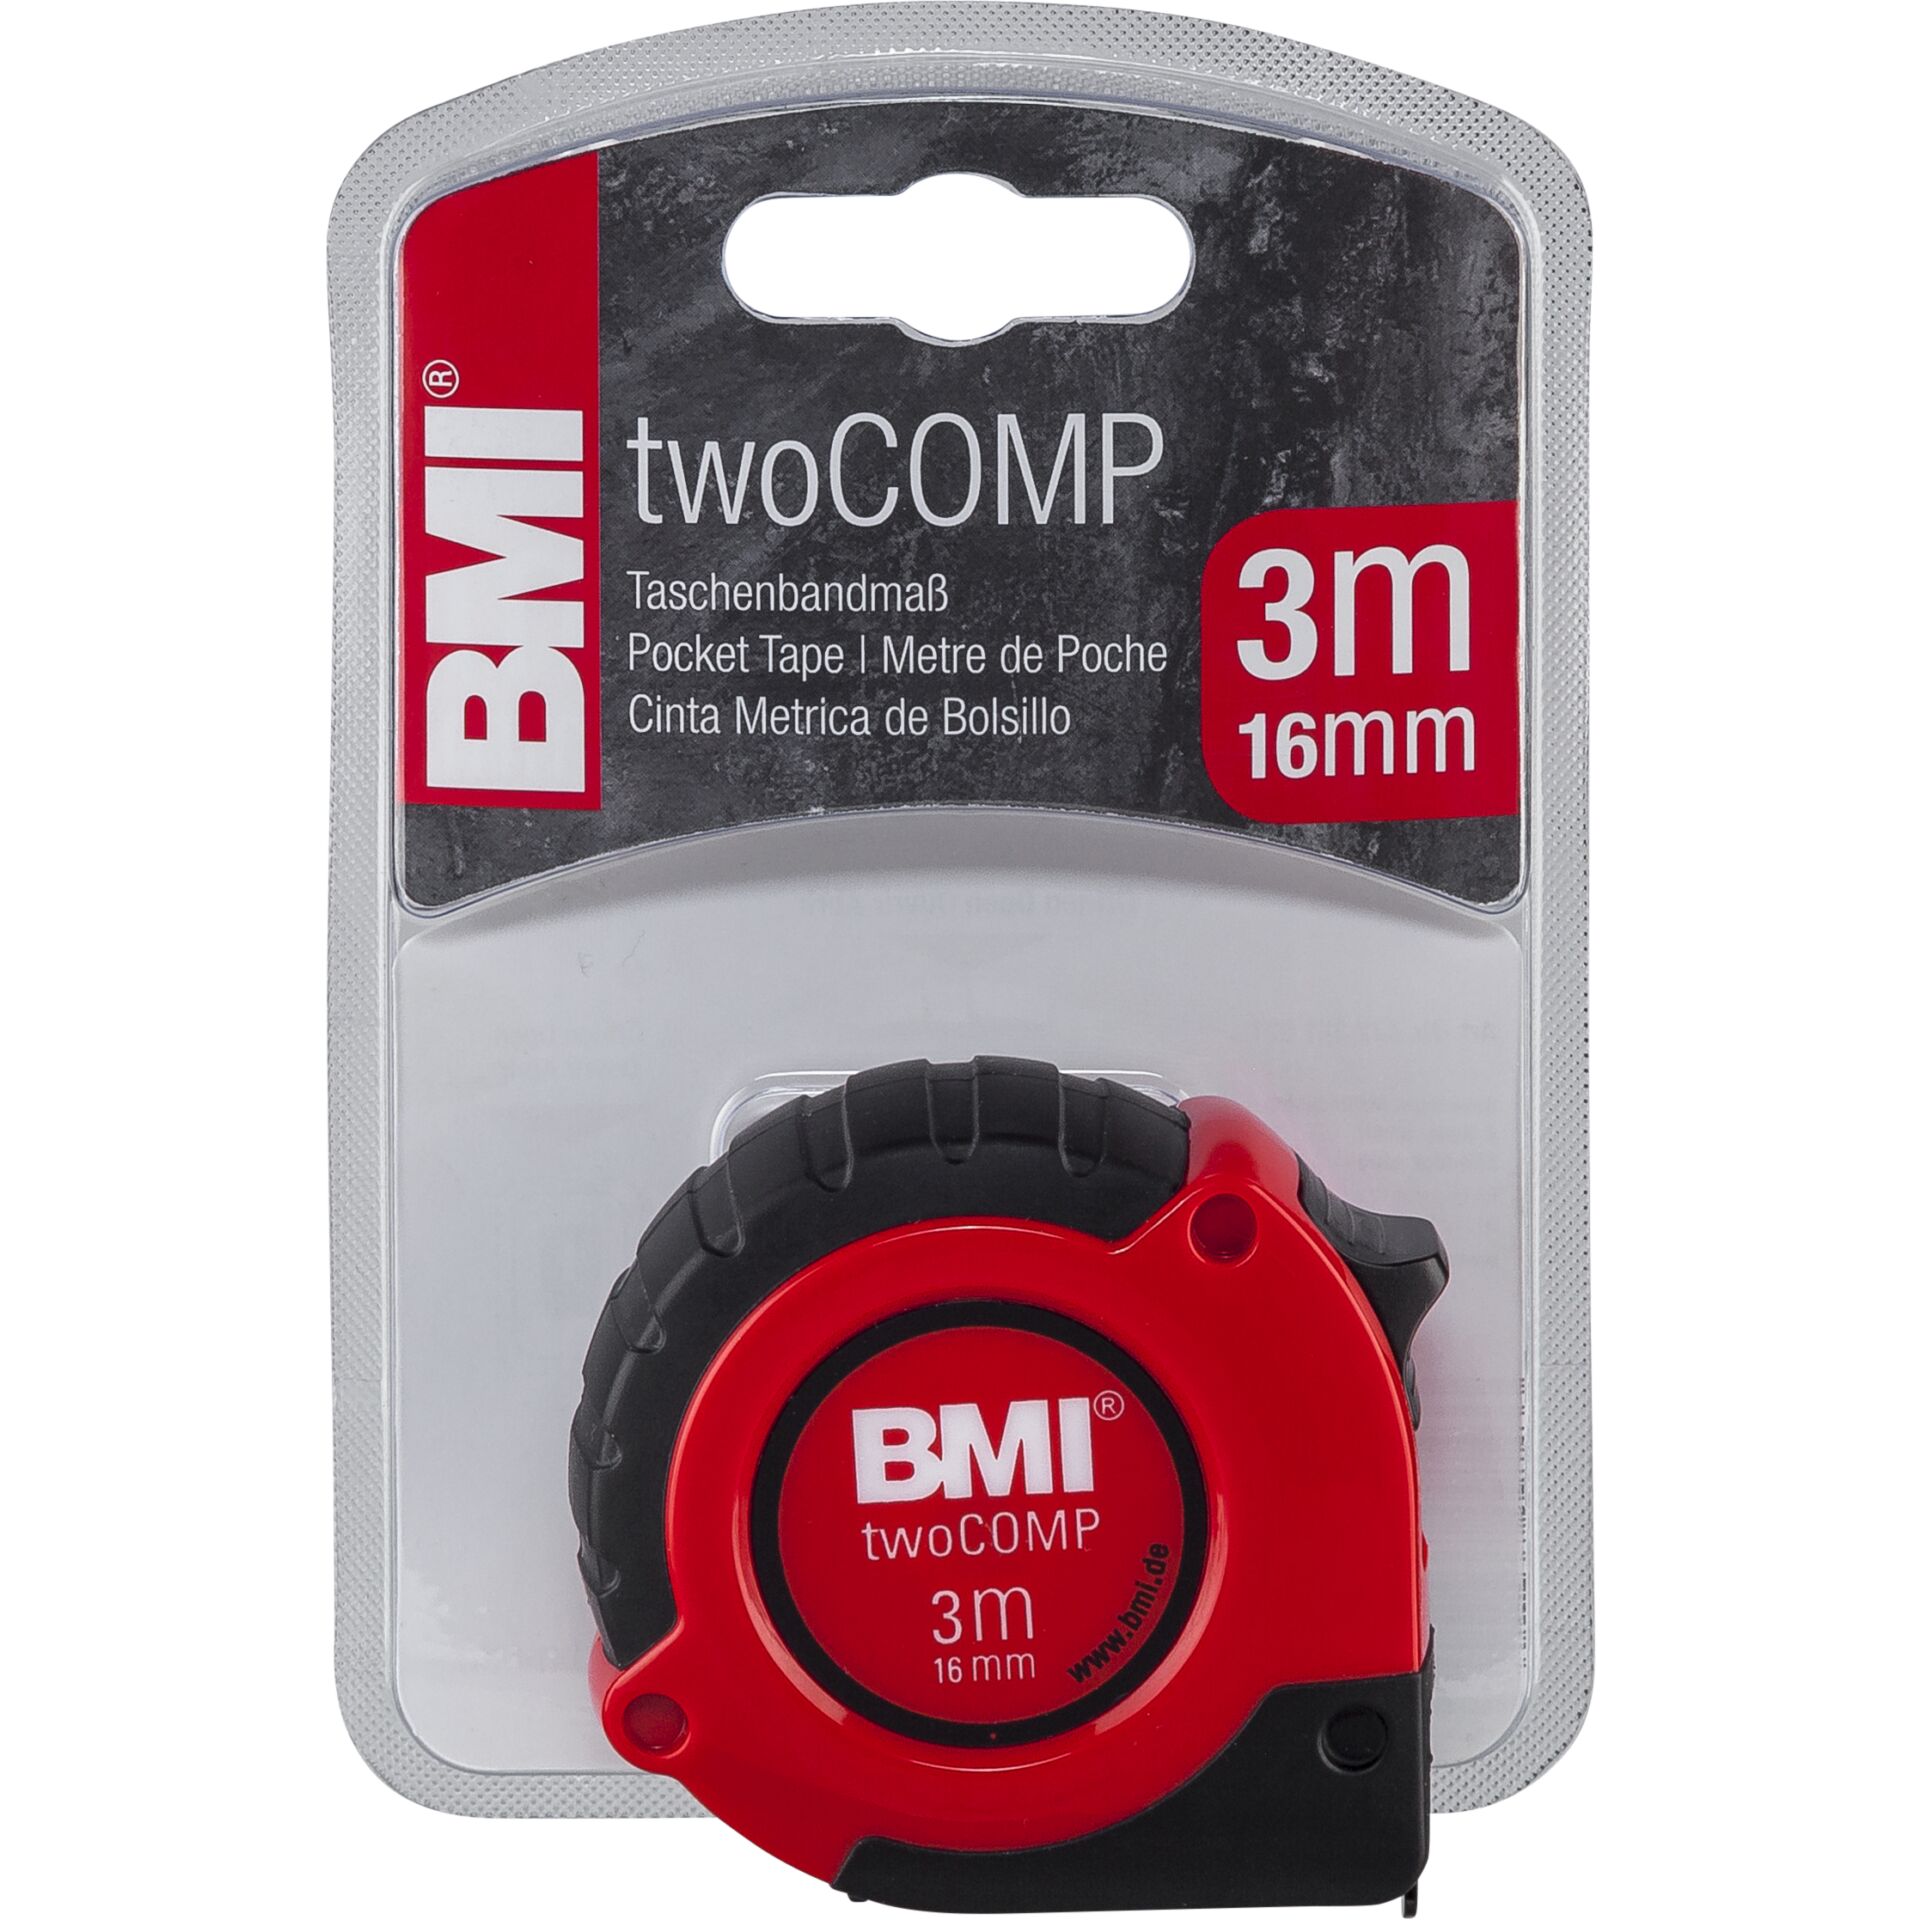 Distance Tools : BMI TwoComp 3m Pocket Tape Measures